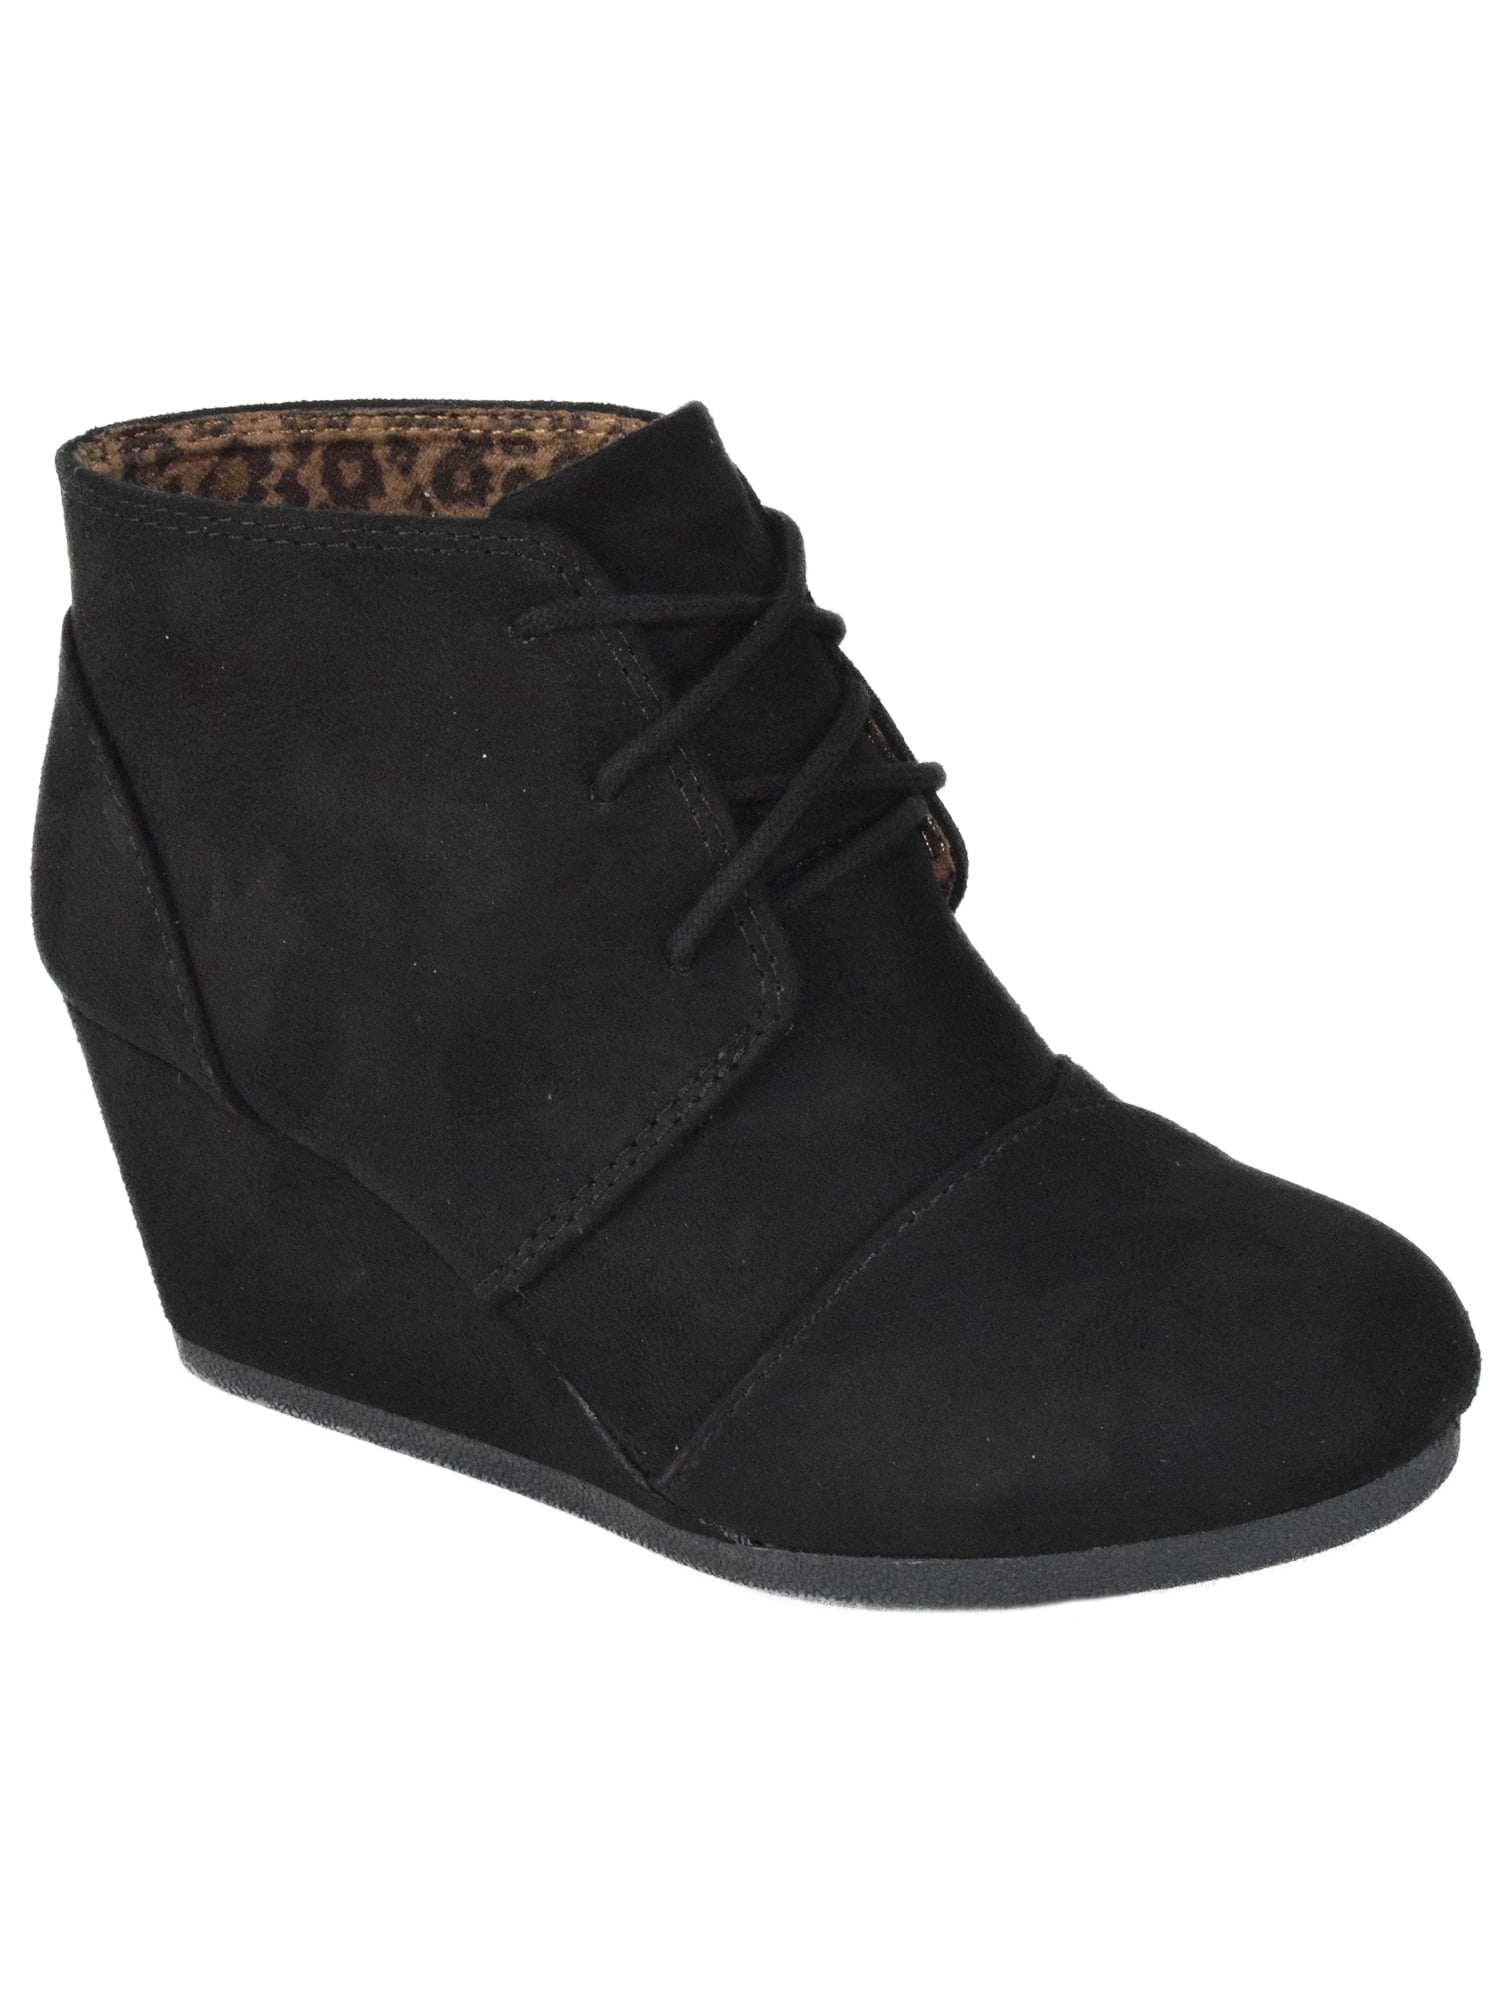 Rex-S Black CityClassified Women Small Short Wedge Heels Ankle Boots ...